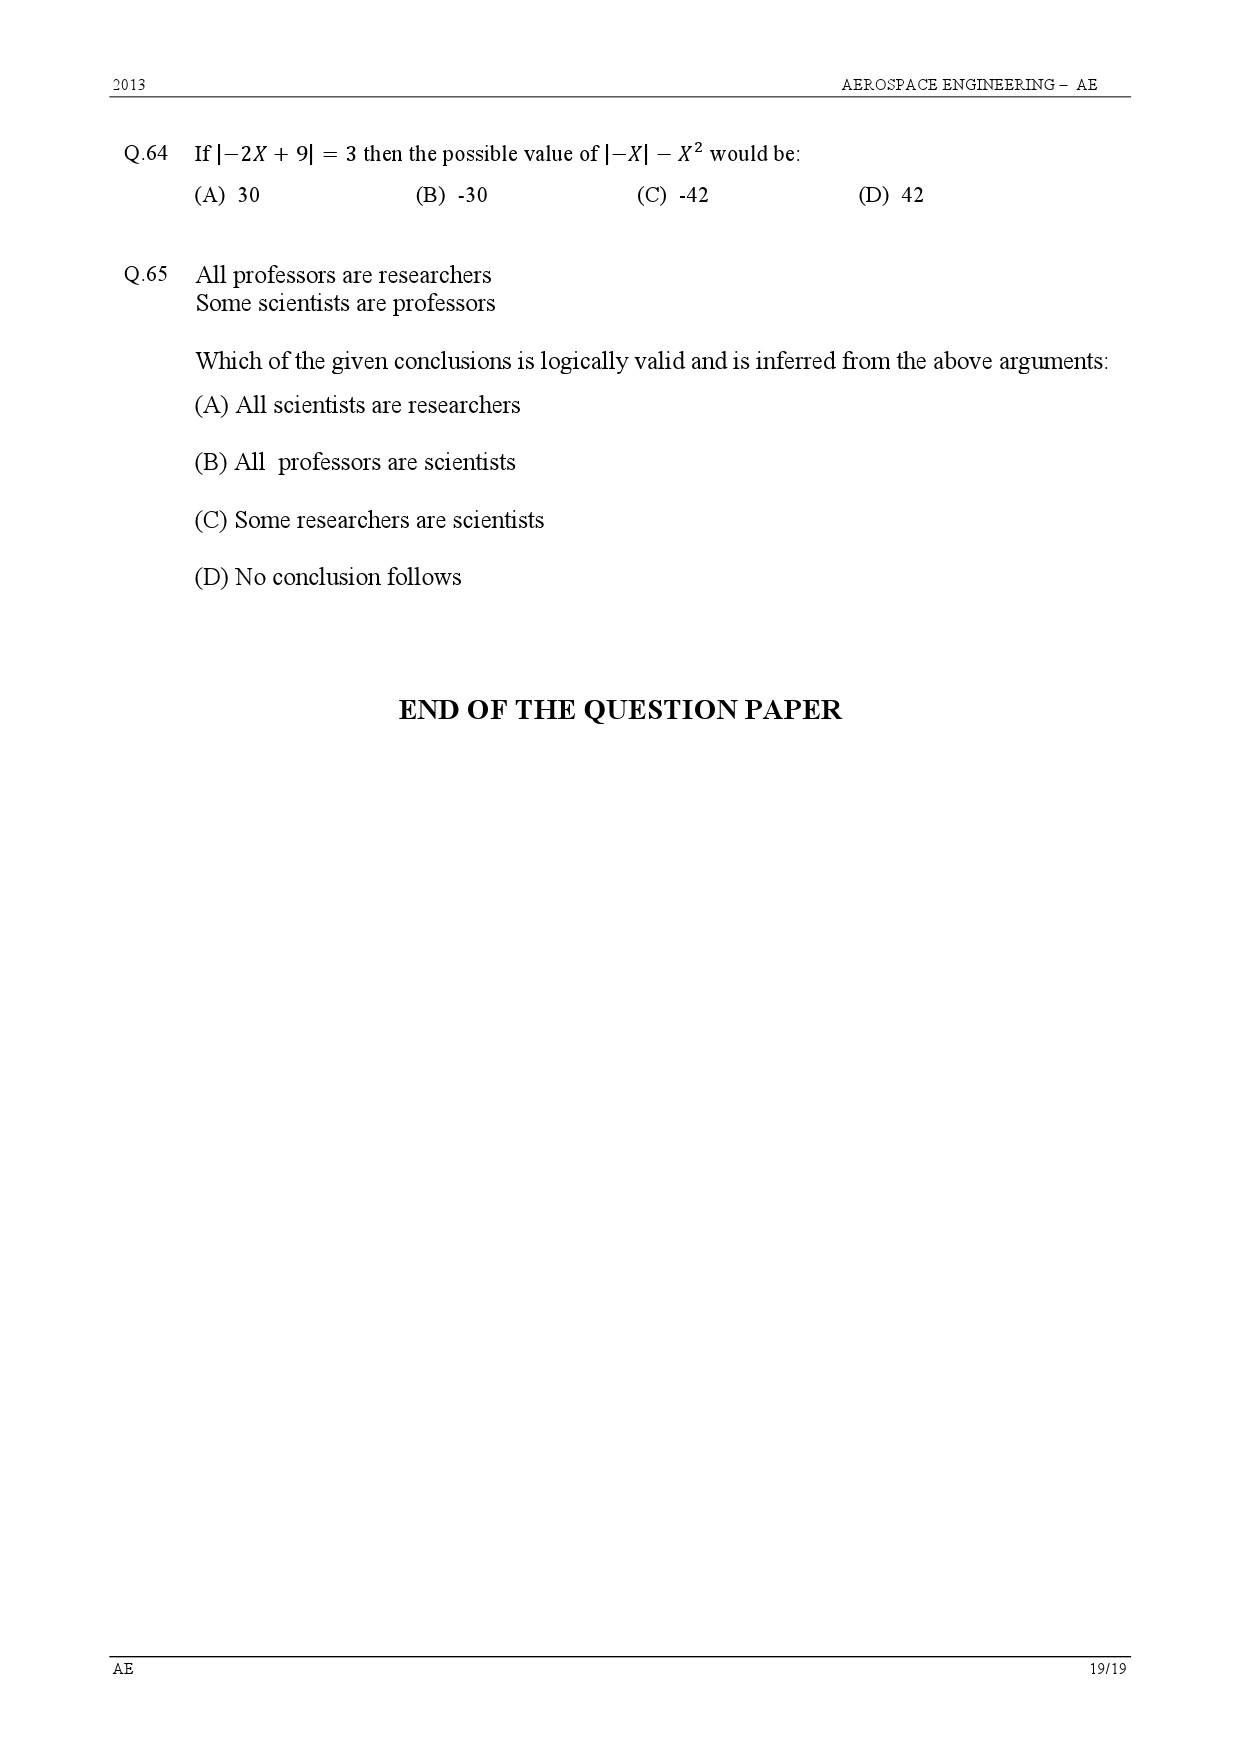 GATE Exam 2013 Aerospace Engineering Question Paper 19